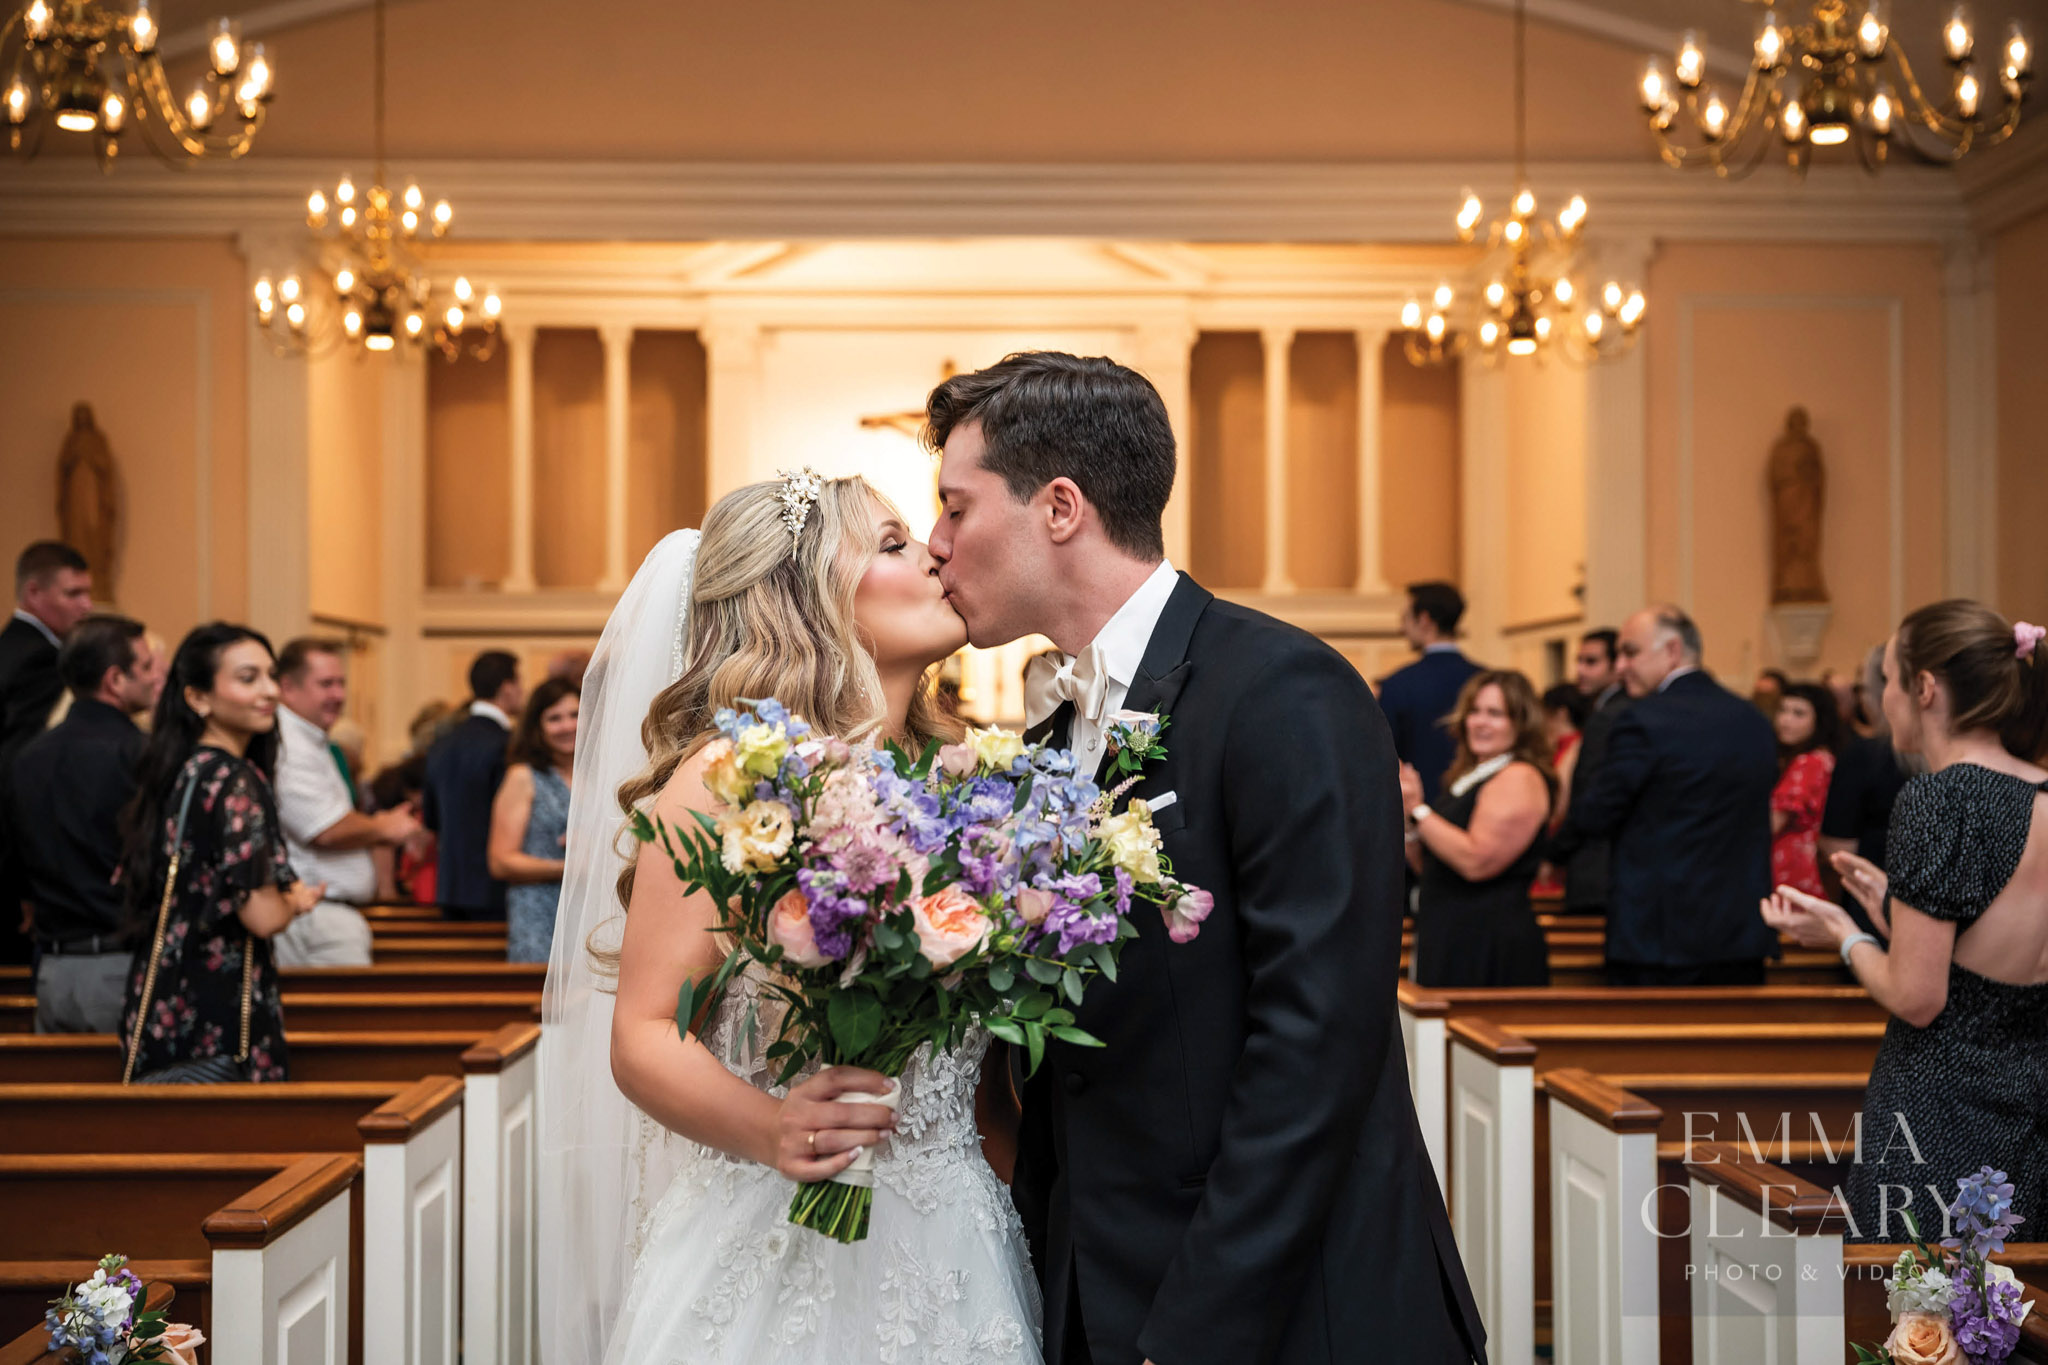 Wedding kiss in the church